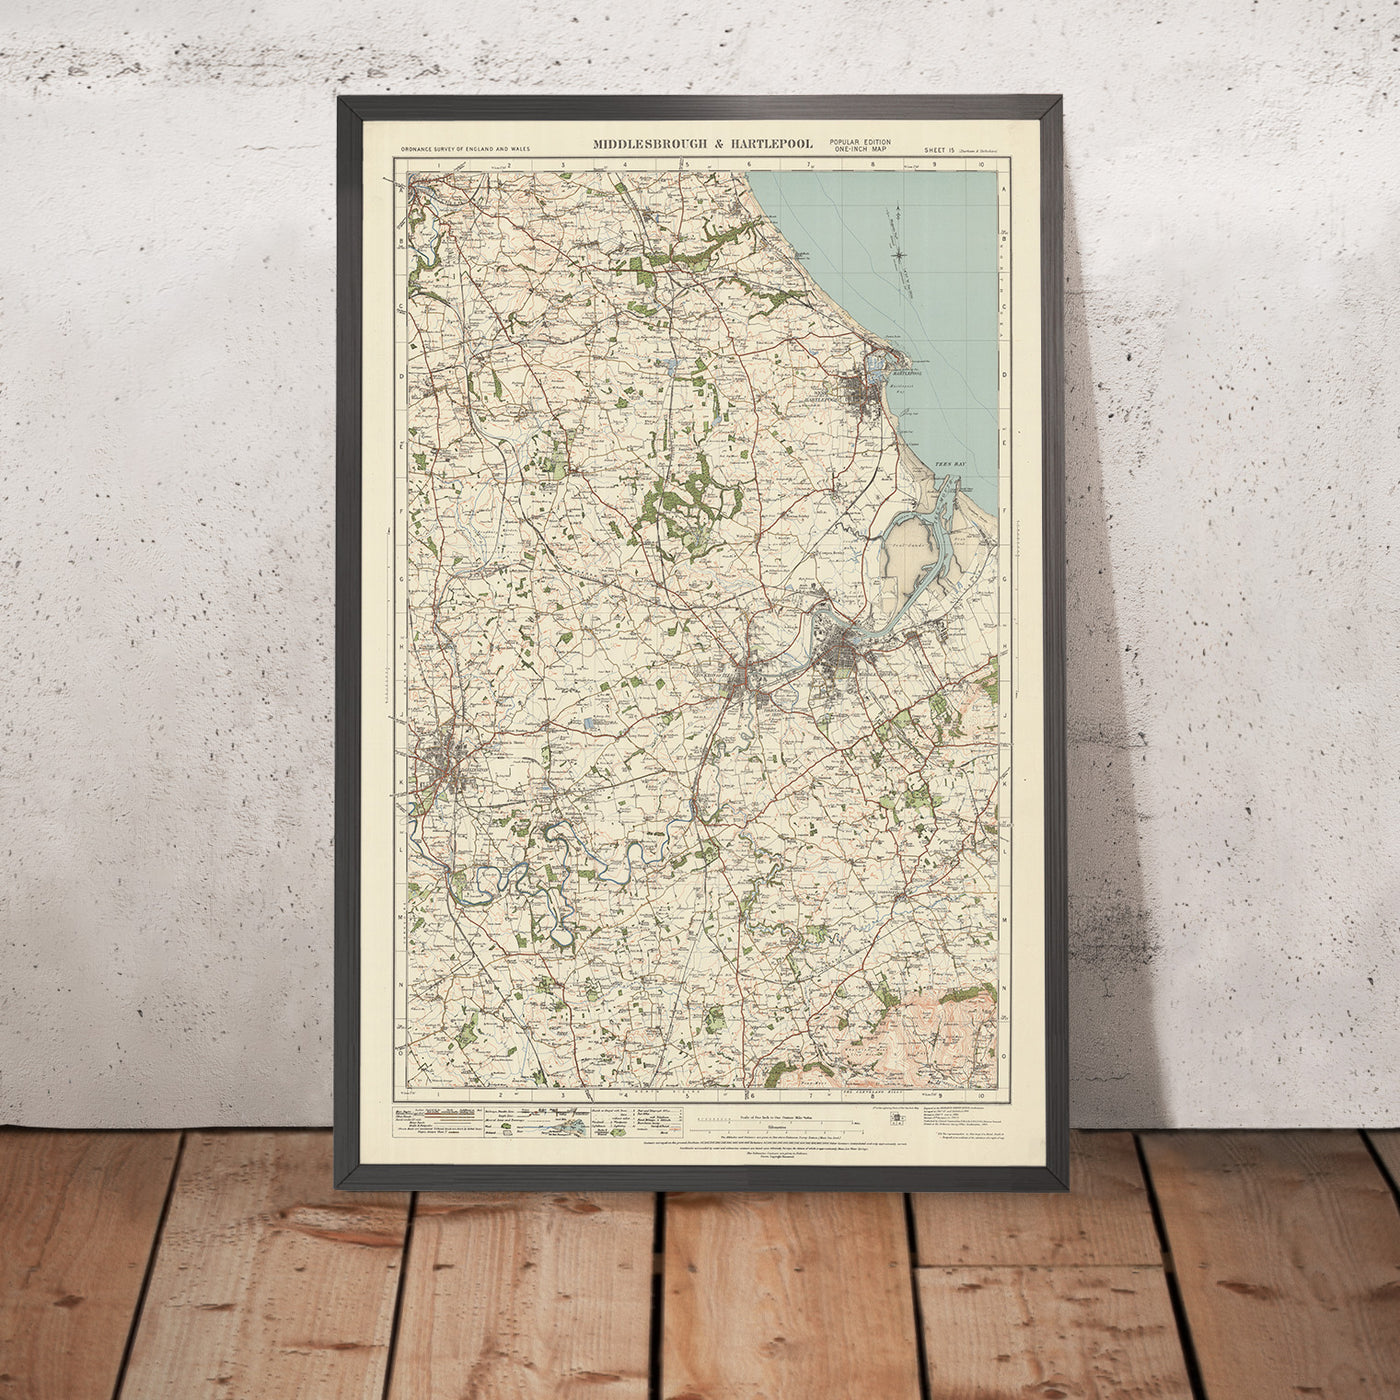 Mapa antiguo de Ordnance Survey, hoja 15 - Middlesbrough & Hartlepool, 1925: Durham, Thornaby, Seaton Carew, Darlington, Stockton-on-Tees